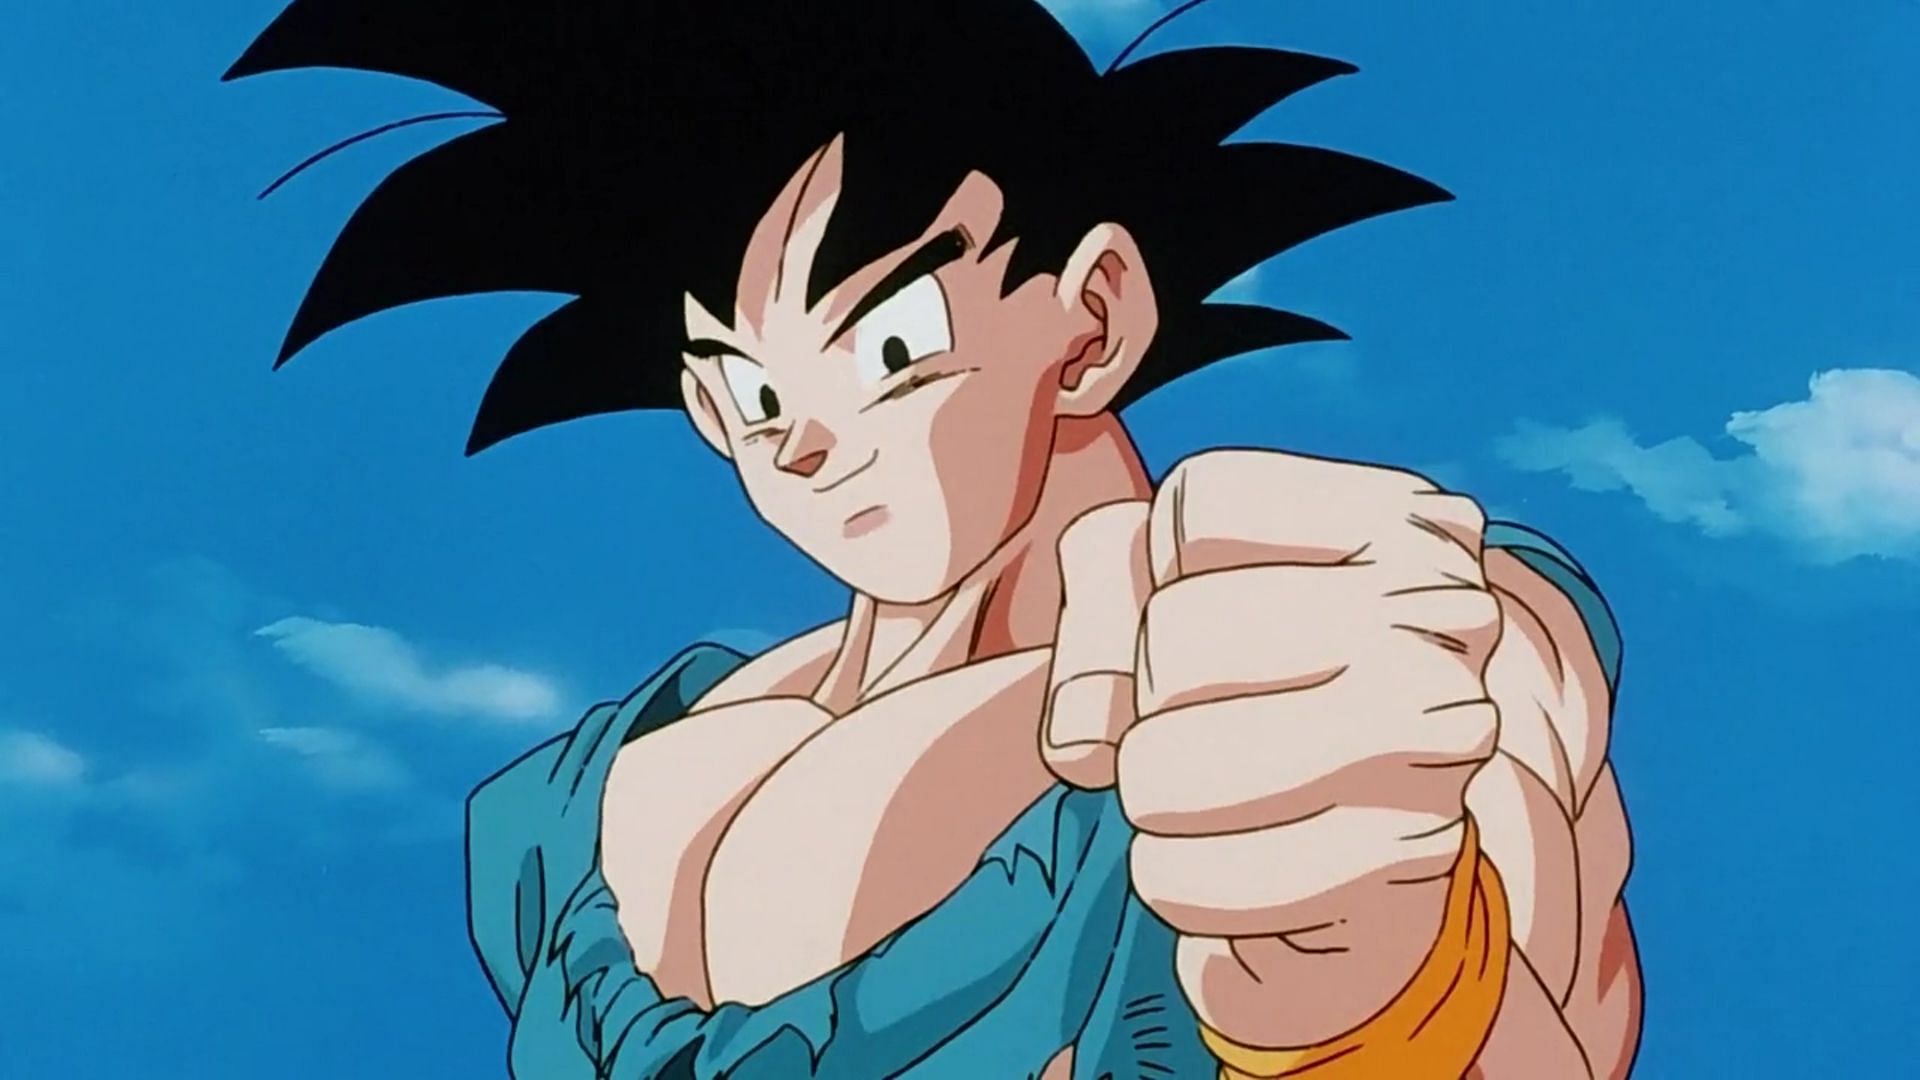 Goku as seen in episode 291 of DBZ (Image via Toei Animation)